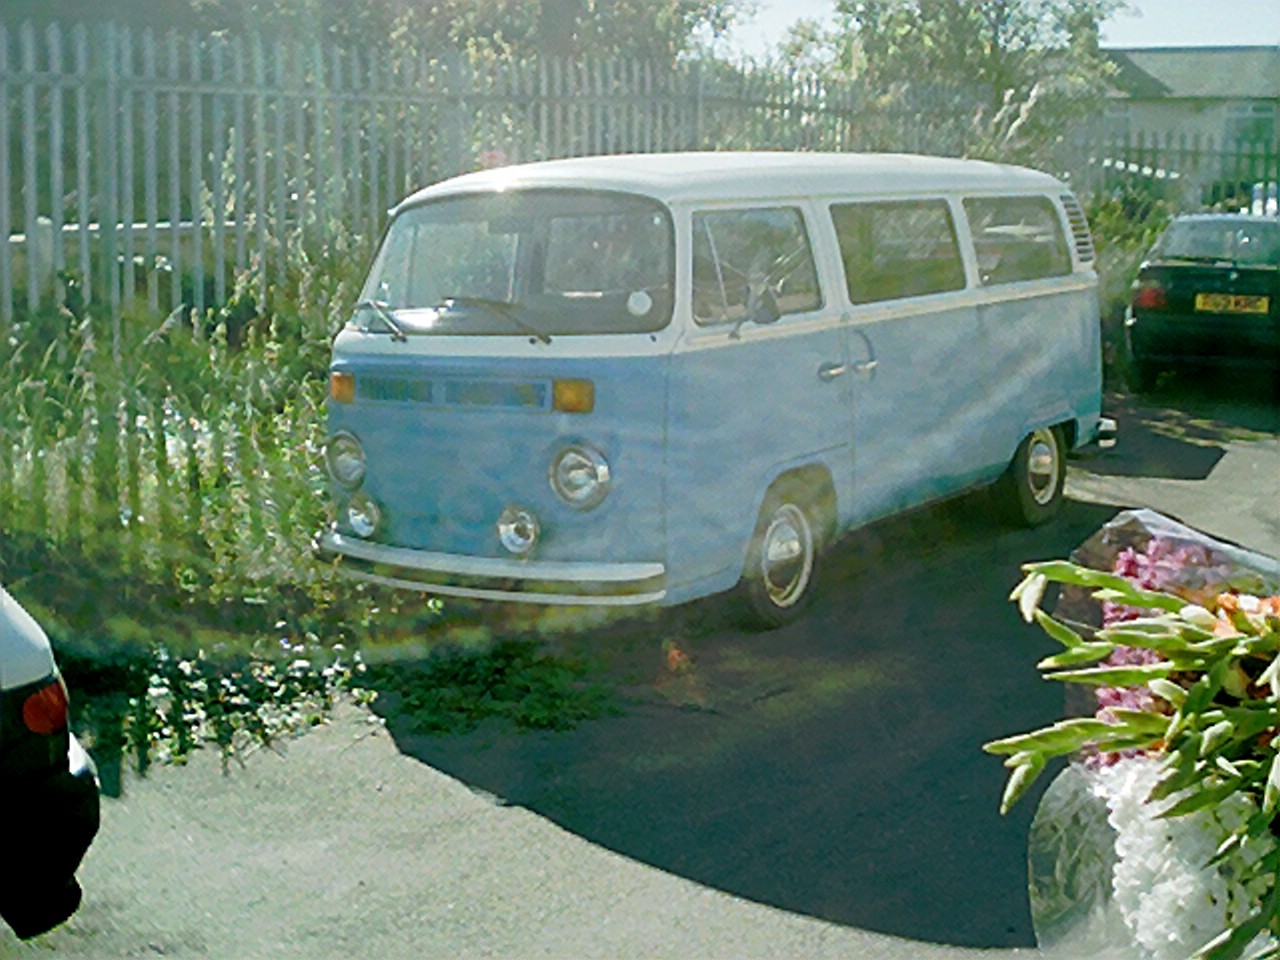 VW mini bus 1975 Sold £1,500